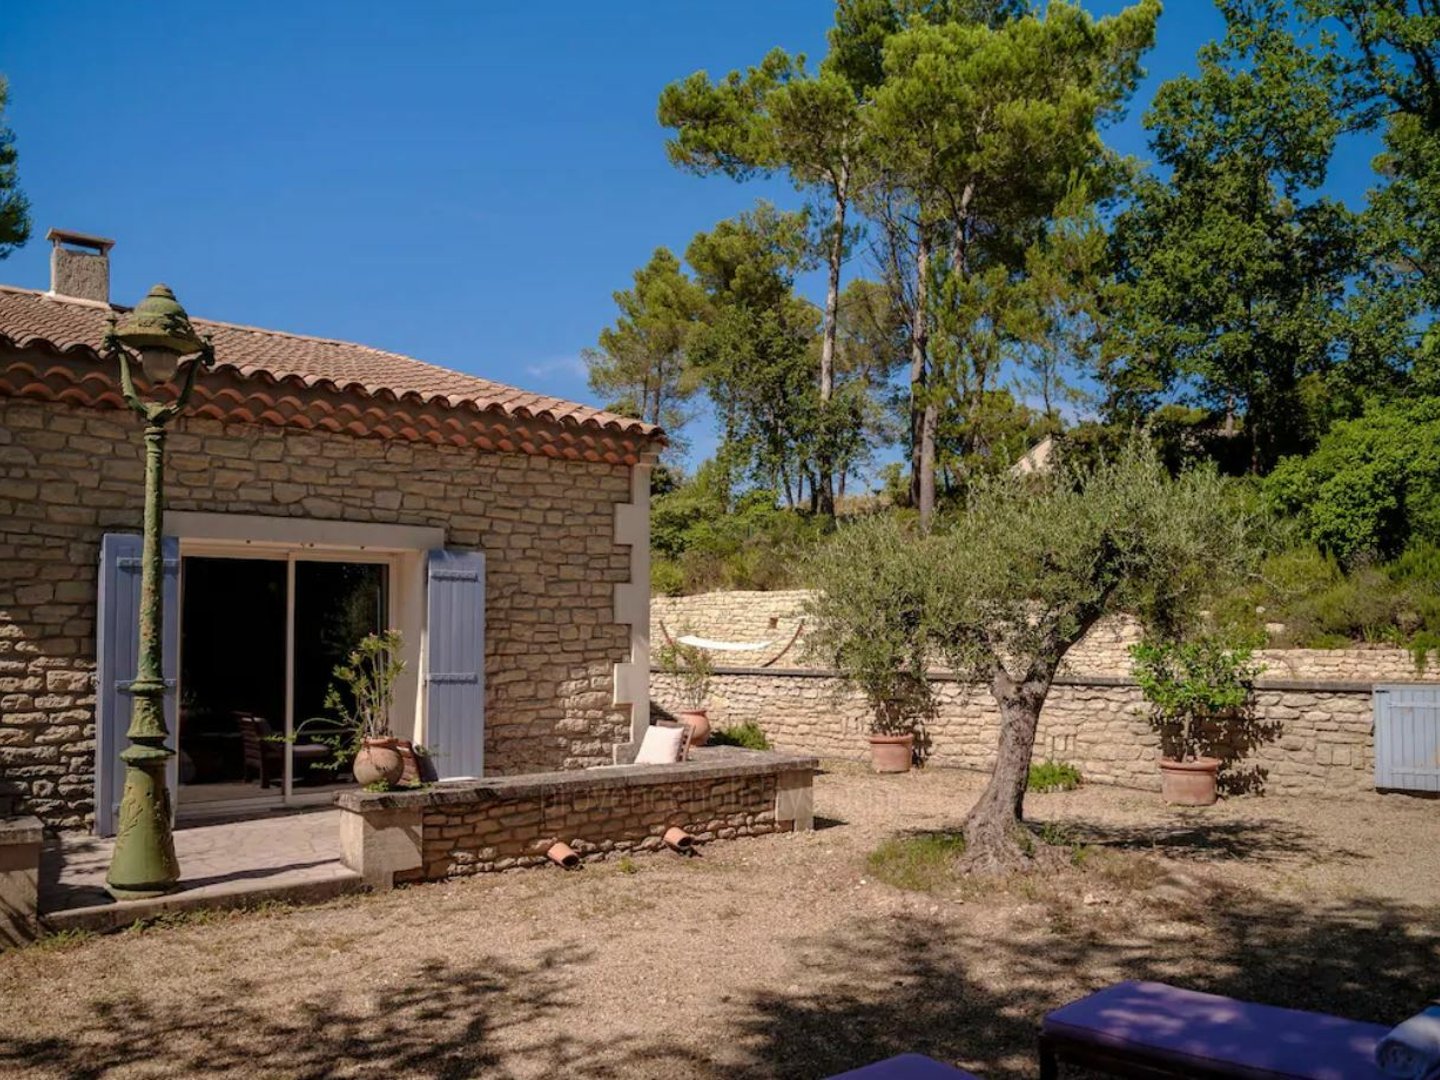 20 - Maison Provence: Villa: Exterior